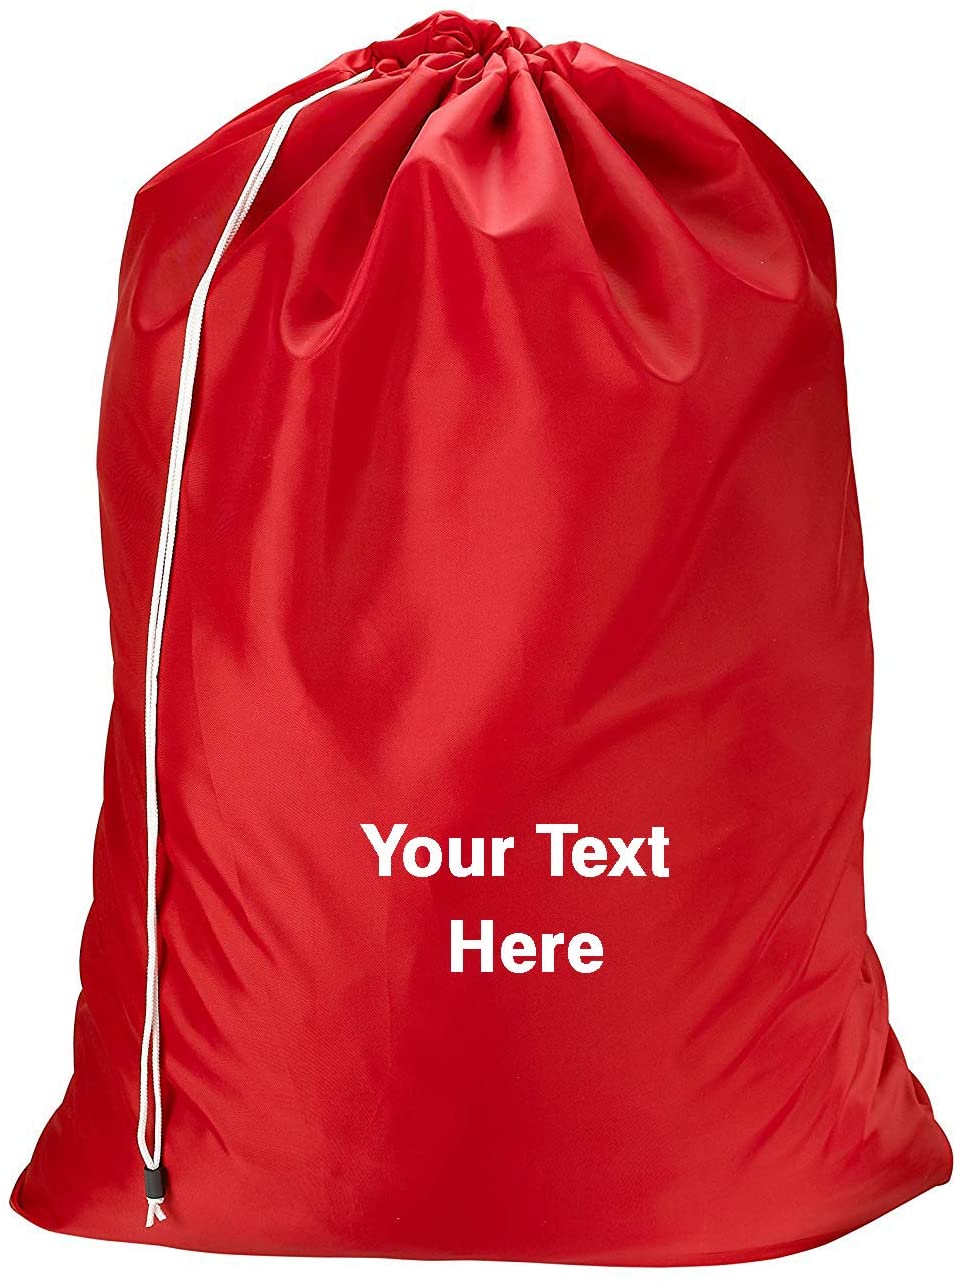 Personalized Nylon Laundry Bag - Locking Drawstring Closure and Machine Washable Red